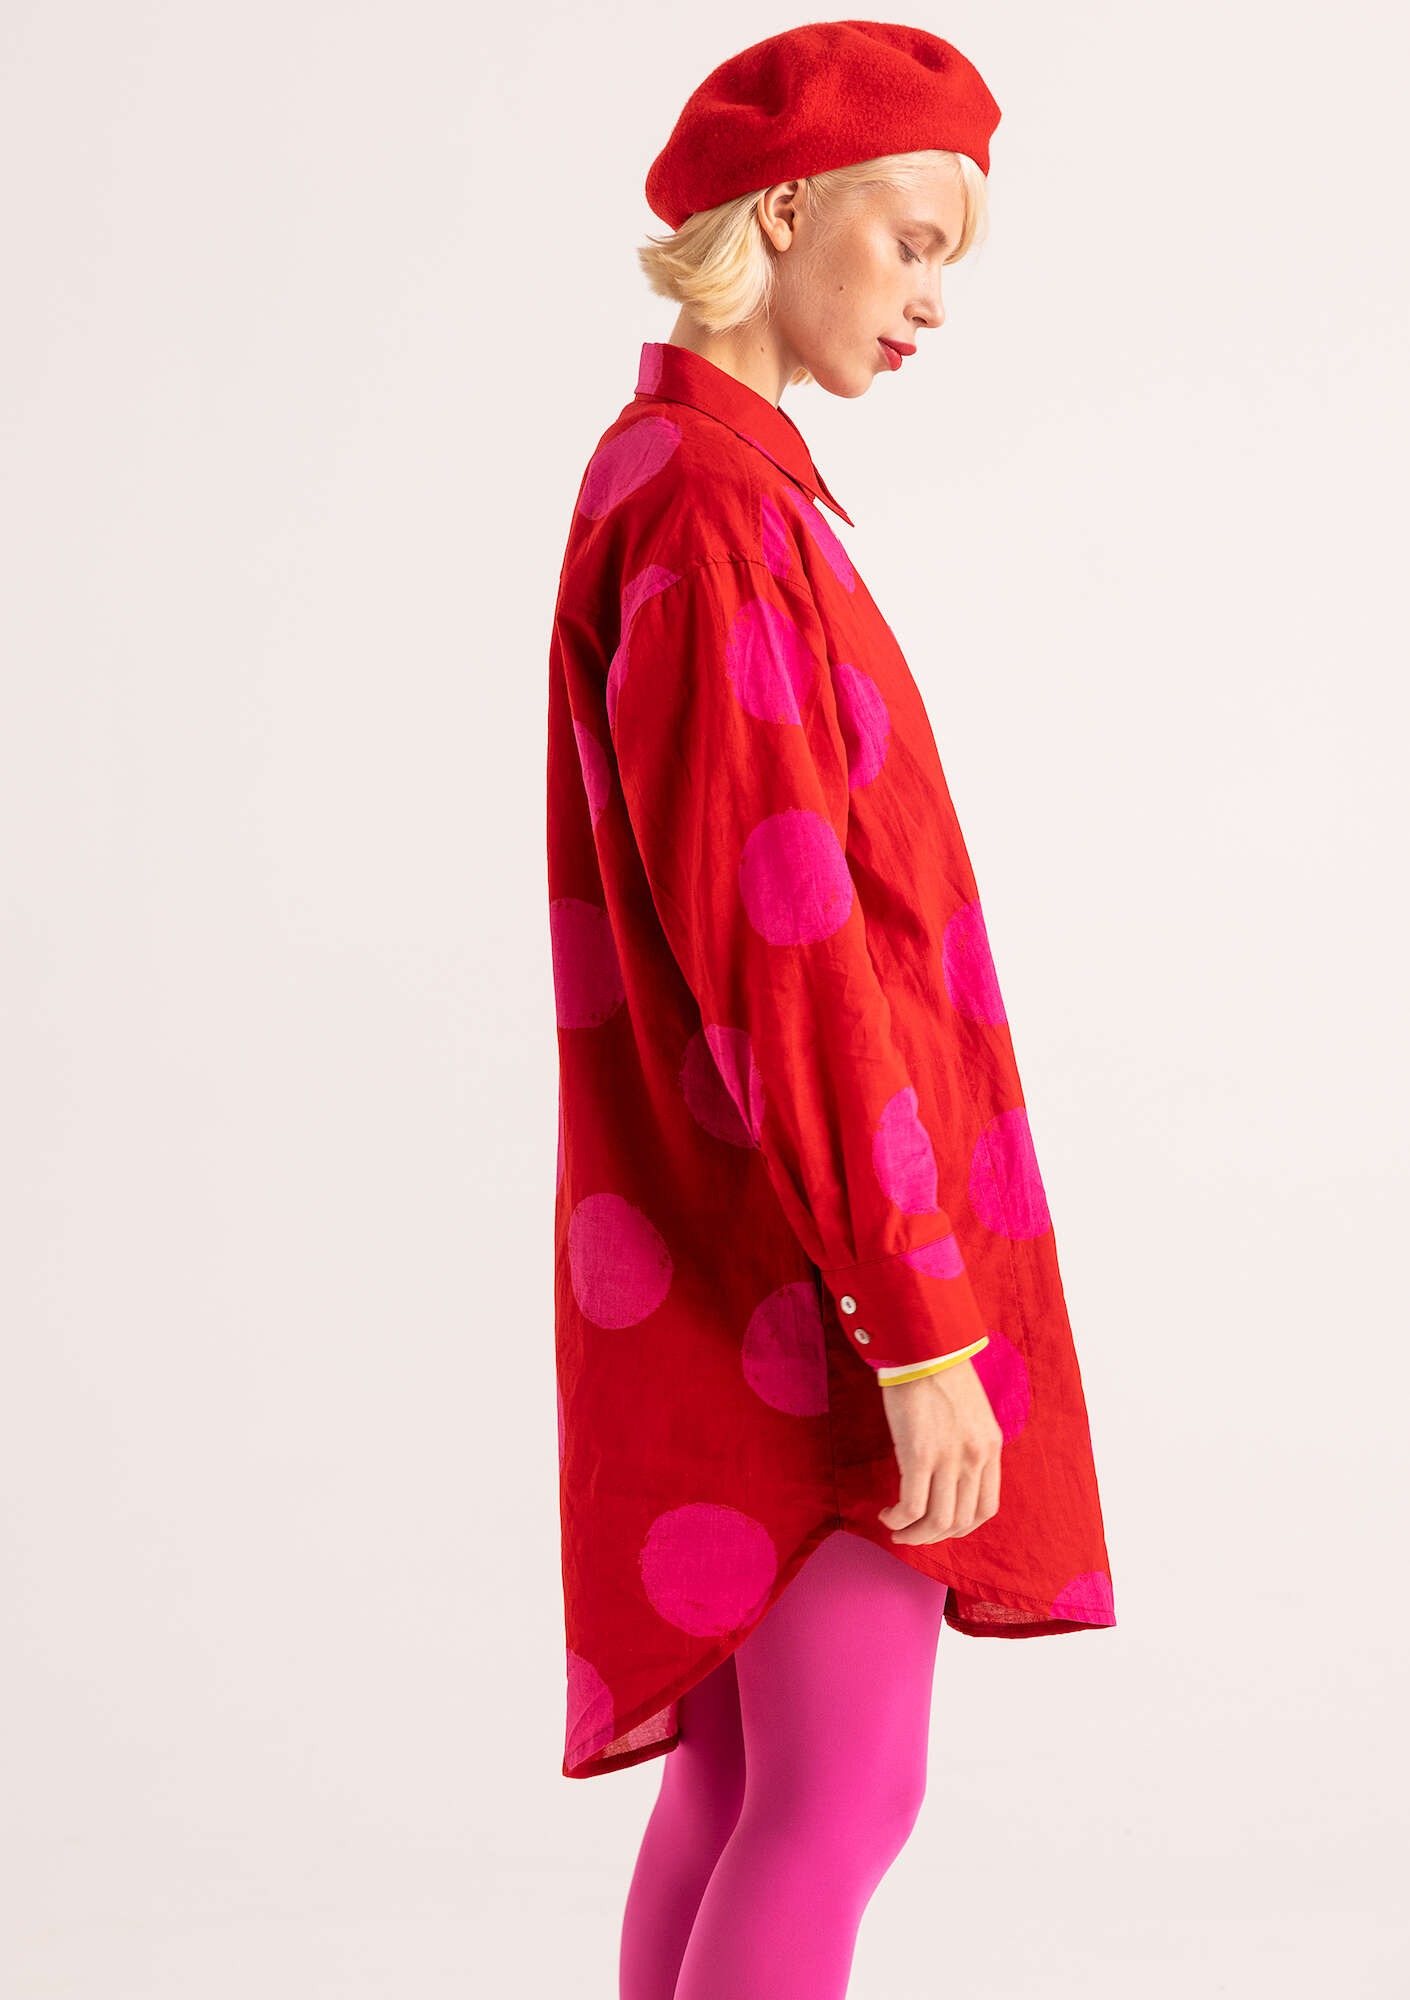 “Palette” organic cotton shirt dress parrot red/patterned